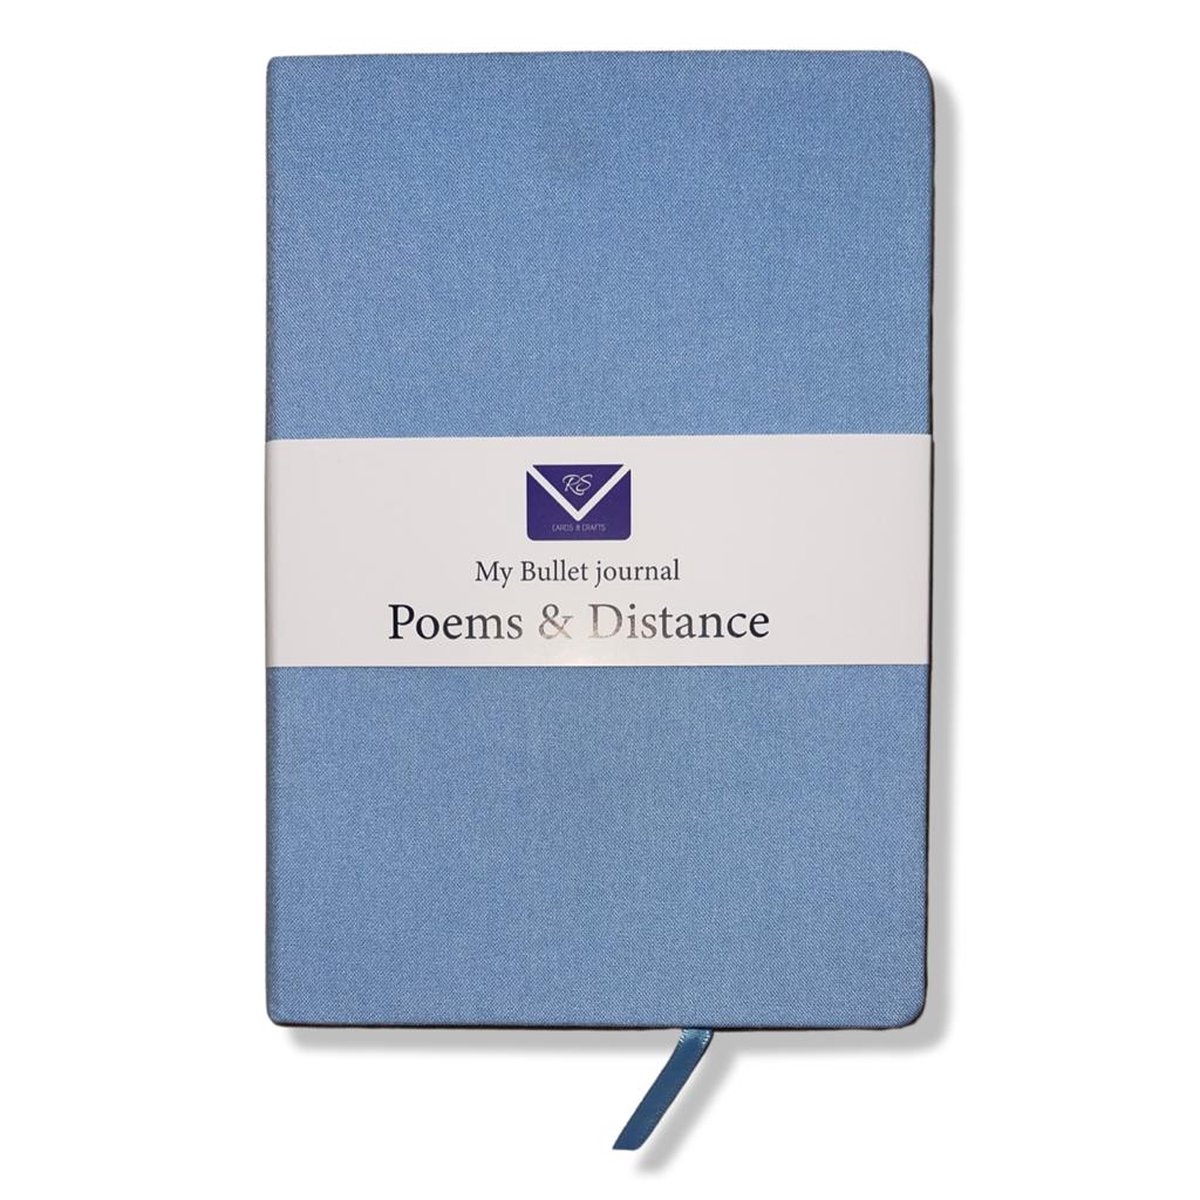 Cards & Crafts Bullet Journal Notitieboek - Blauw - A5 formaat - Hardcover - 100 grams papier - Dotted/puntjes -